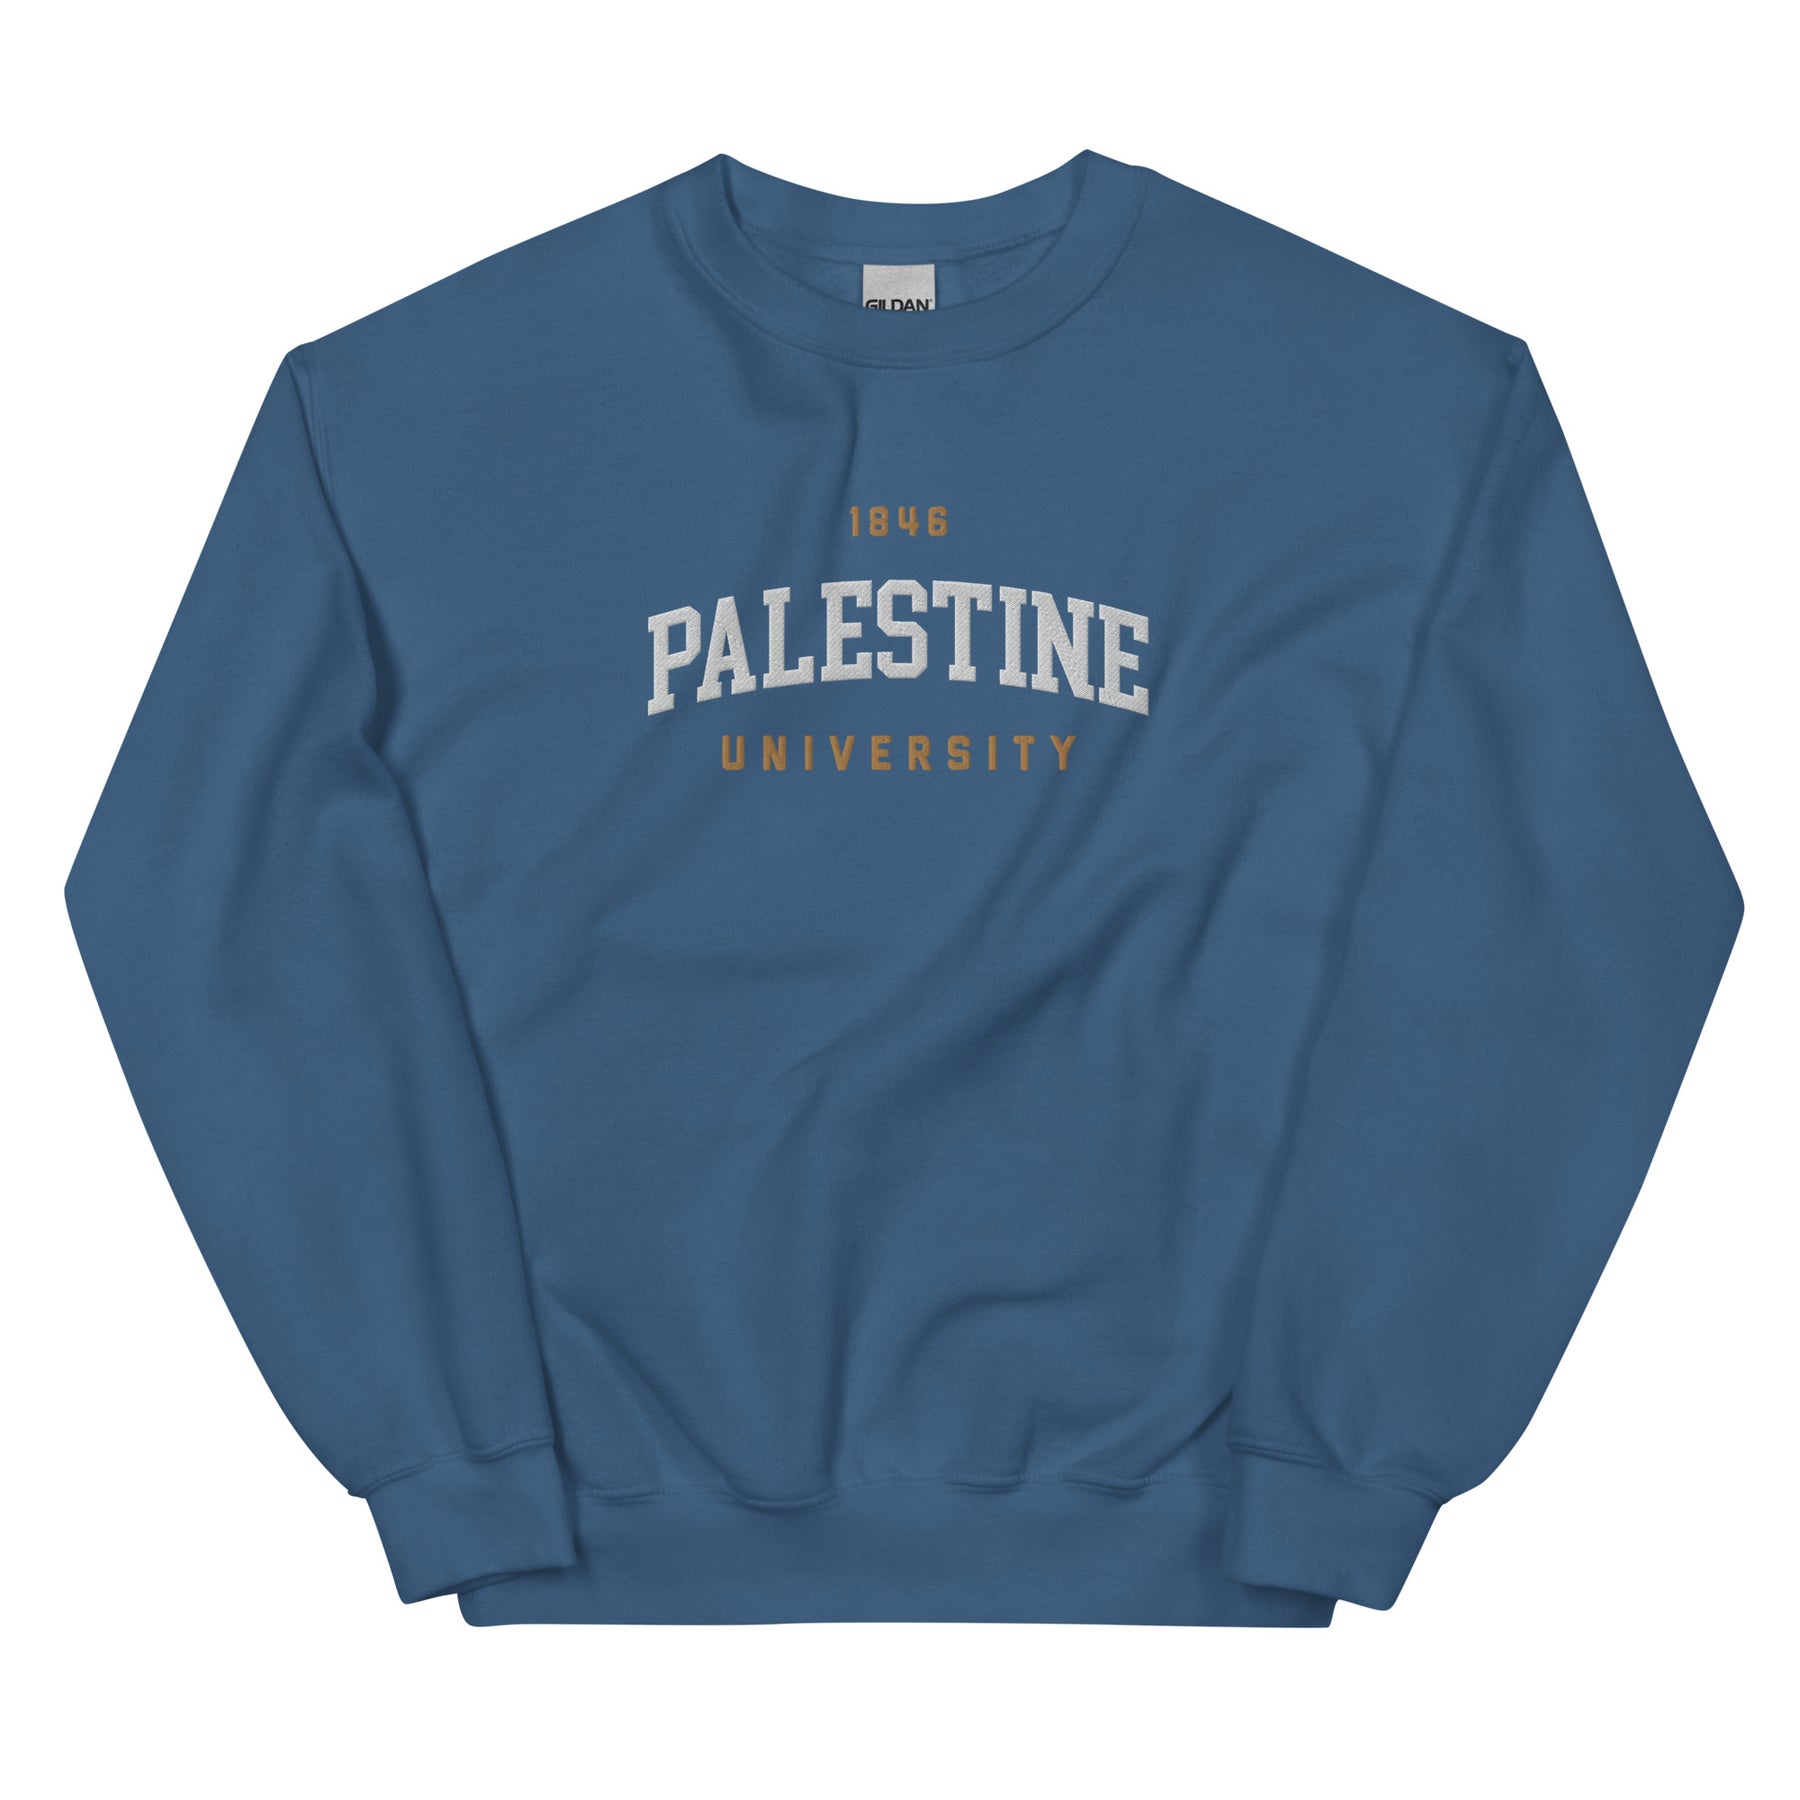 Palestine University 1846 sweatshirt in blue by Dar Collective